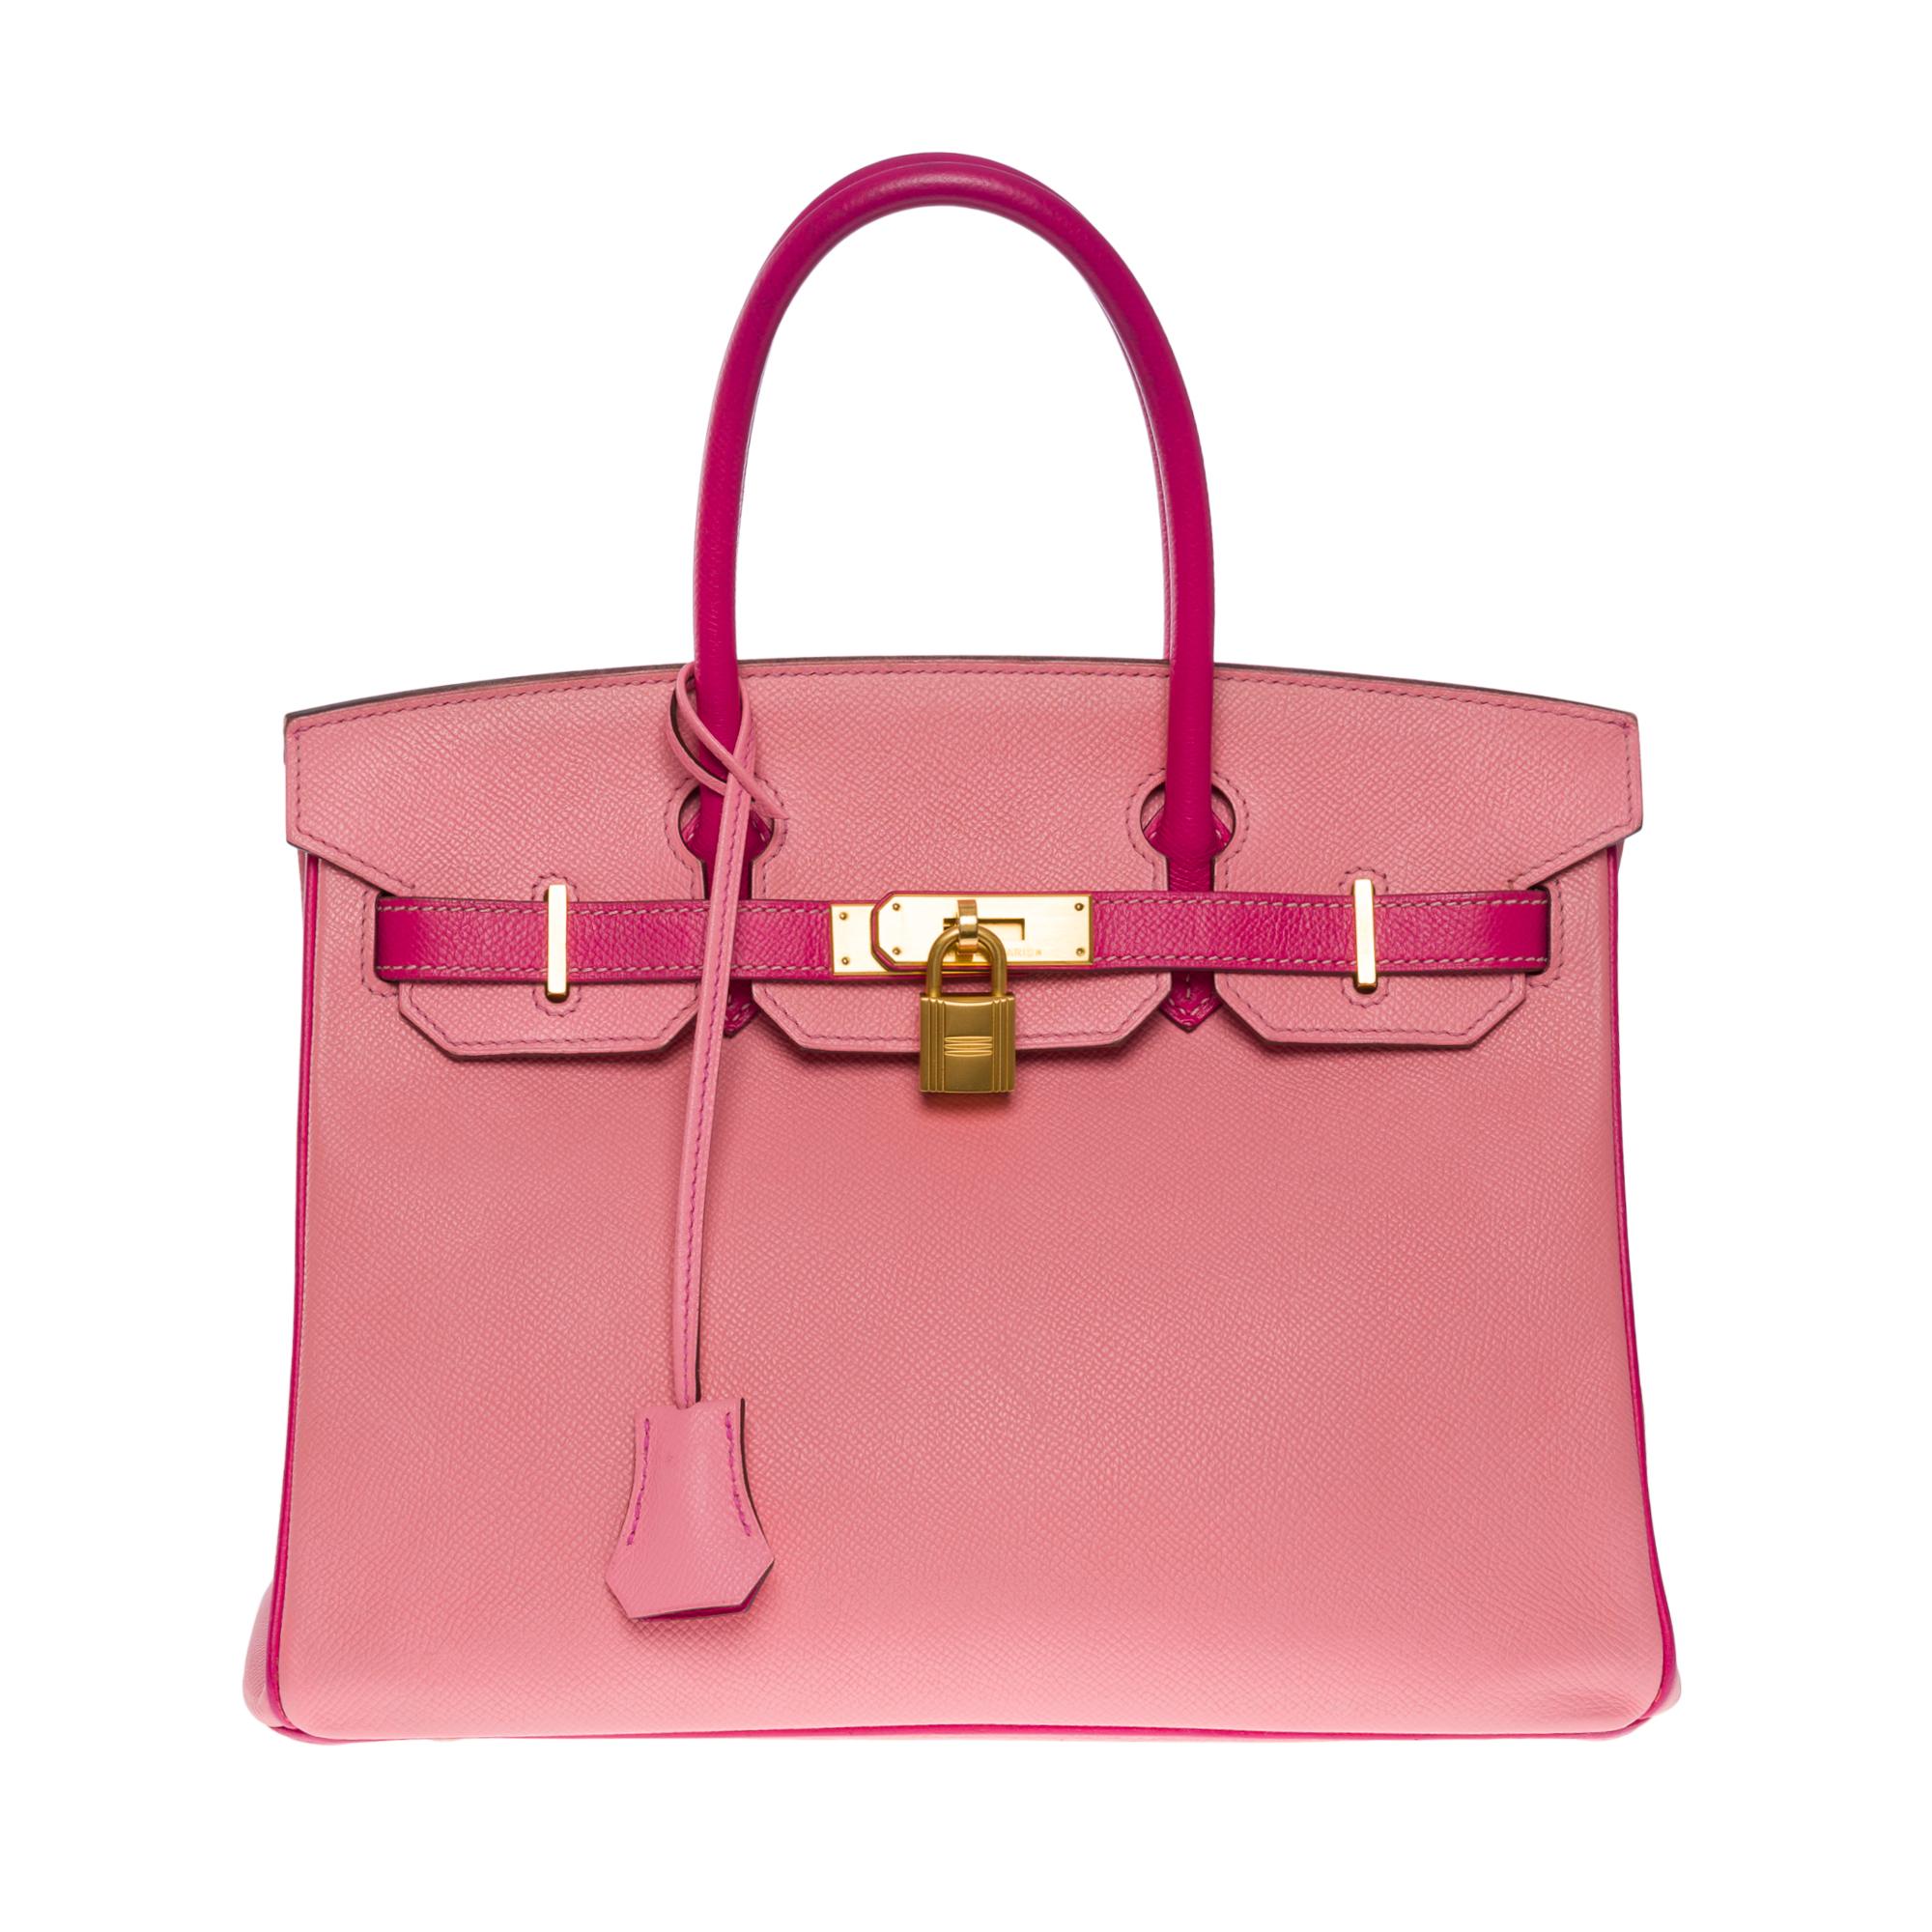 Stunning Hermes Birkin 30 handbag 